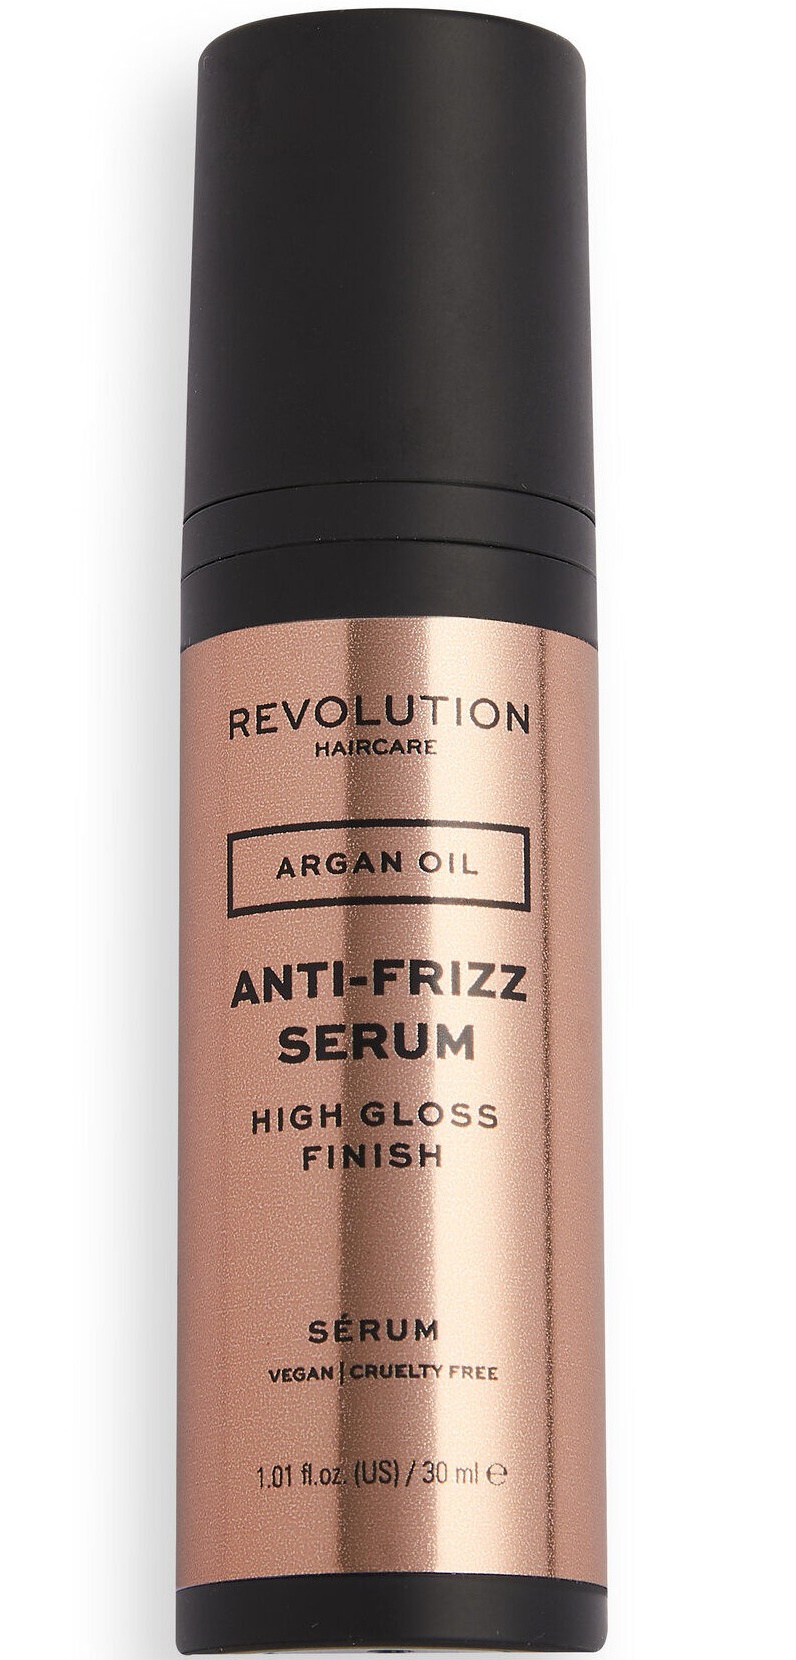 Revolution Haircare Argan Oil Anti-Frizz Serum High Gloss Finish